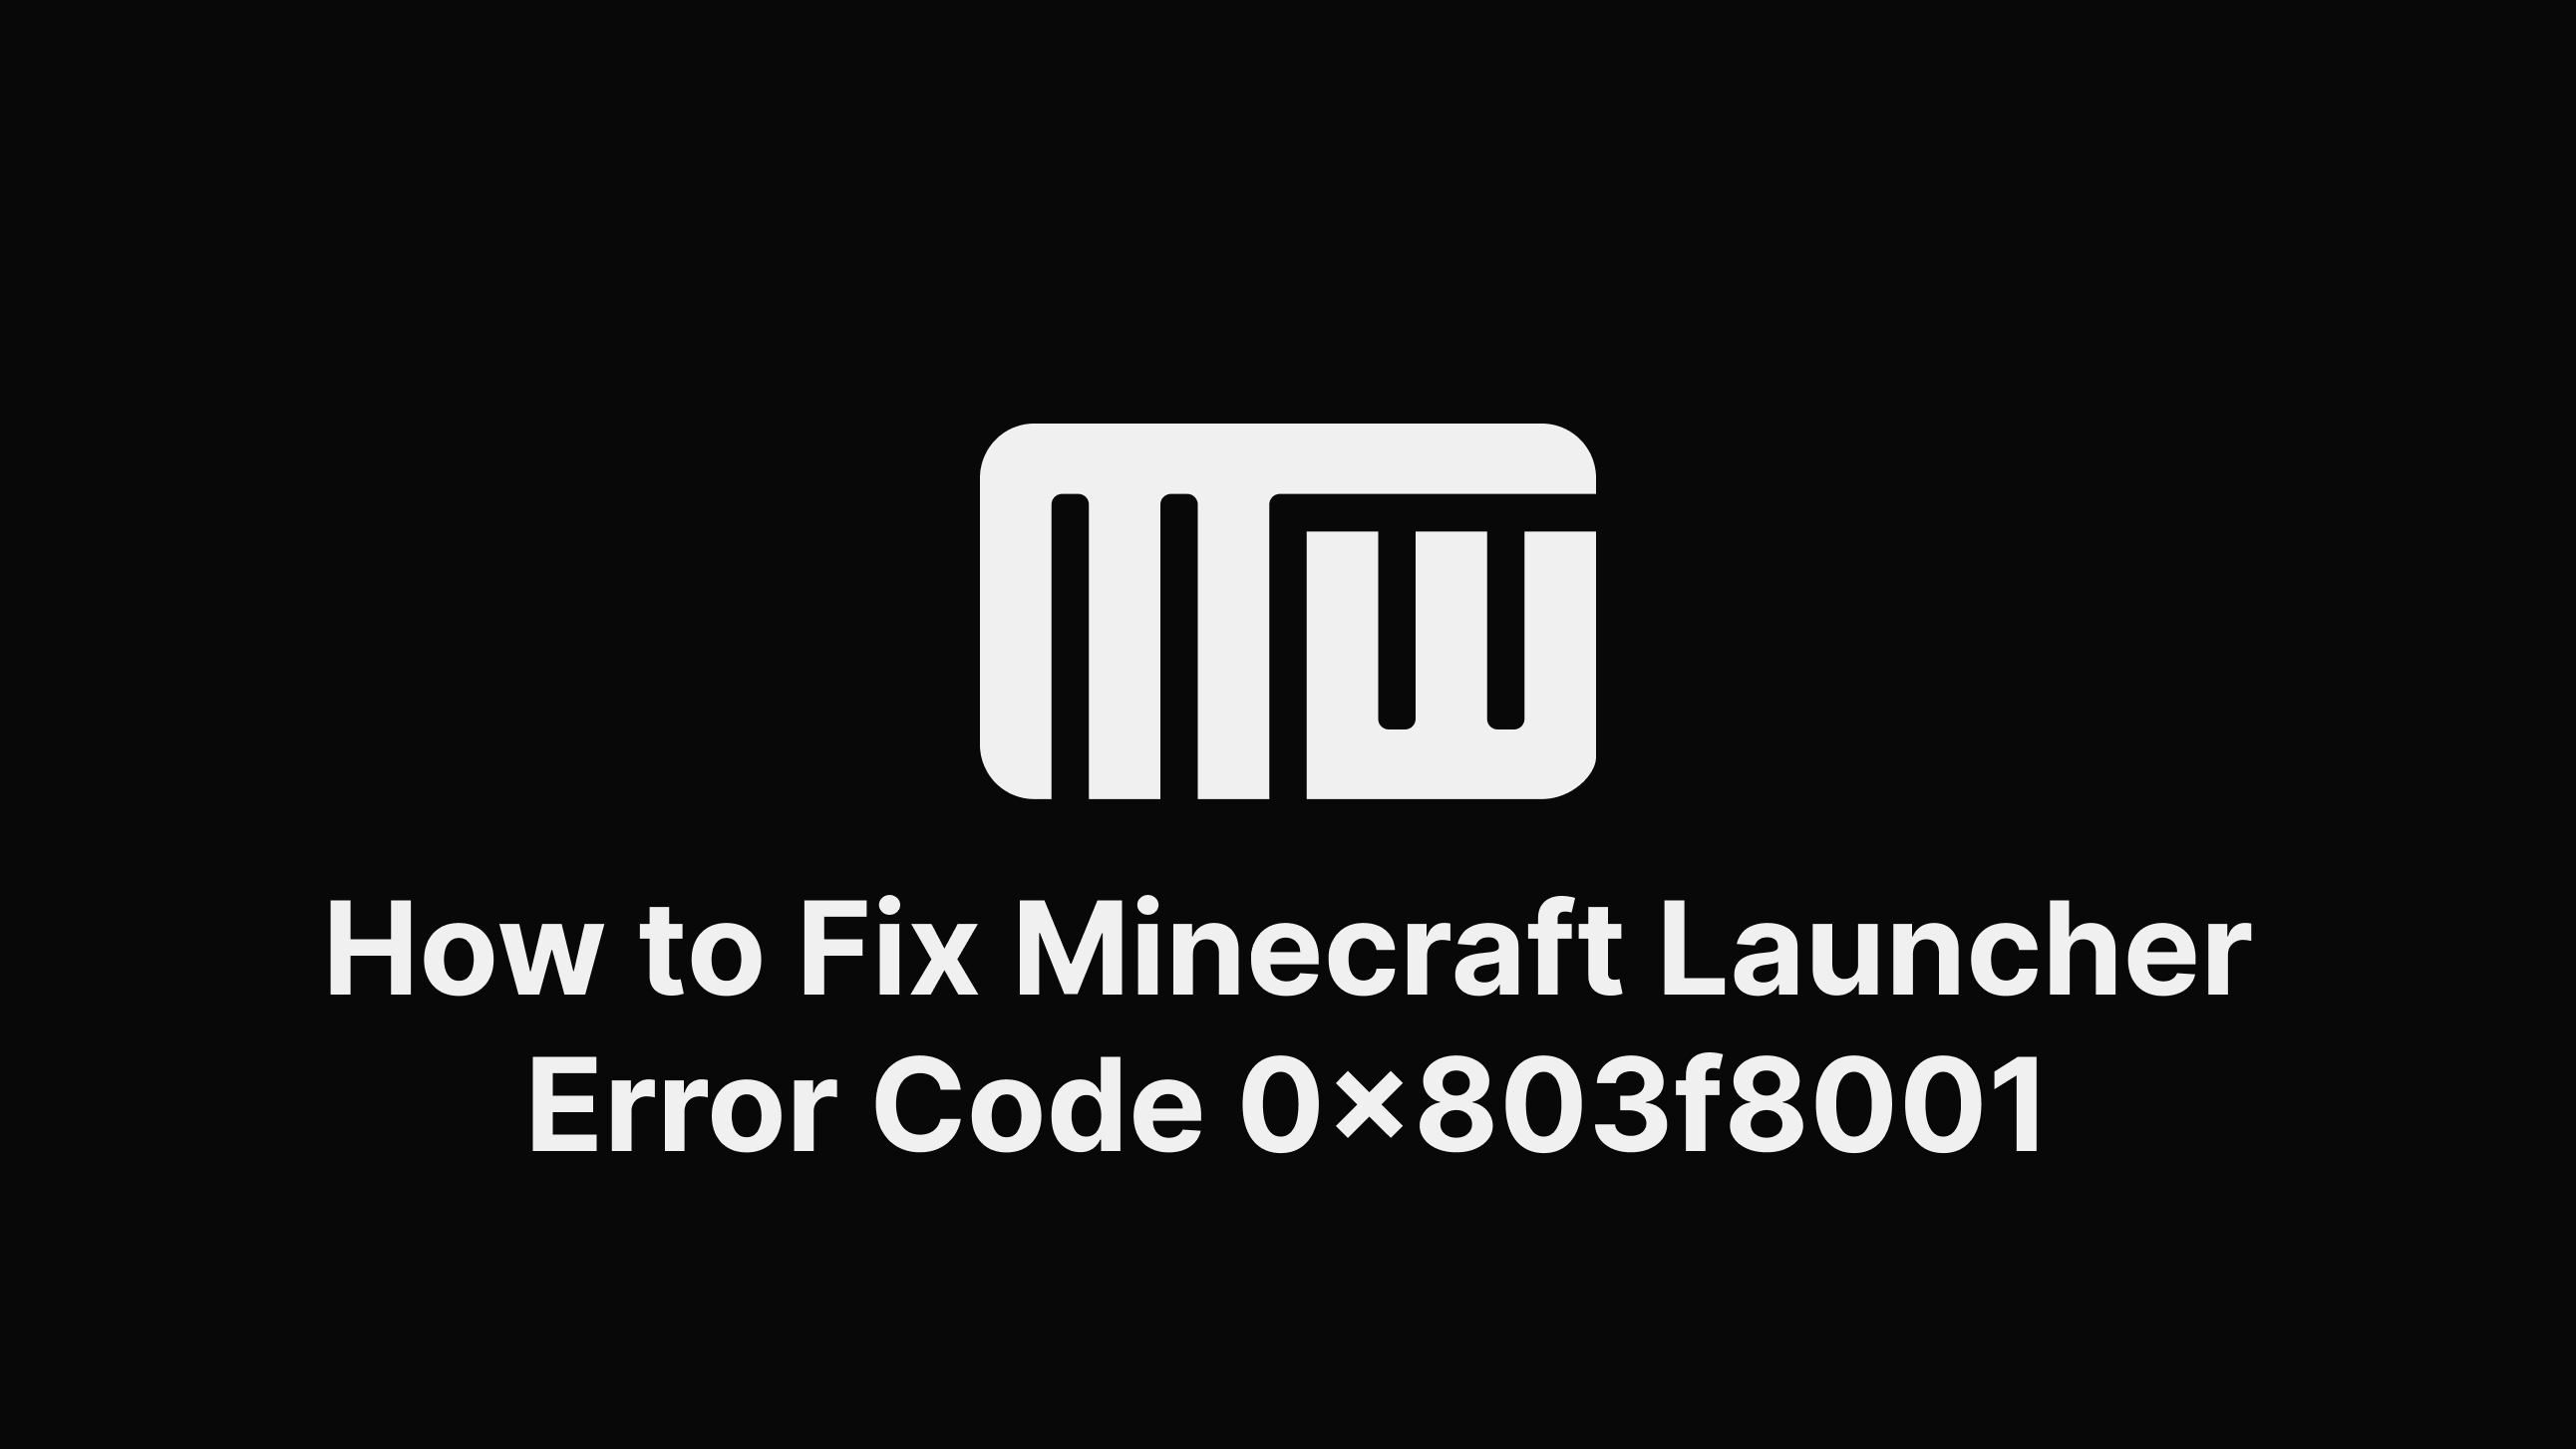 How to Fix Minecraft Launcher Error Code 0x803f8001